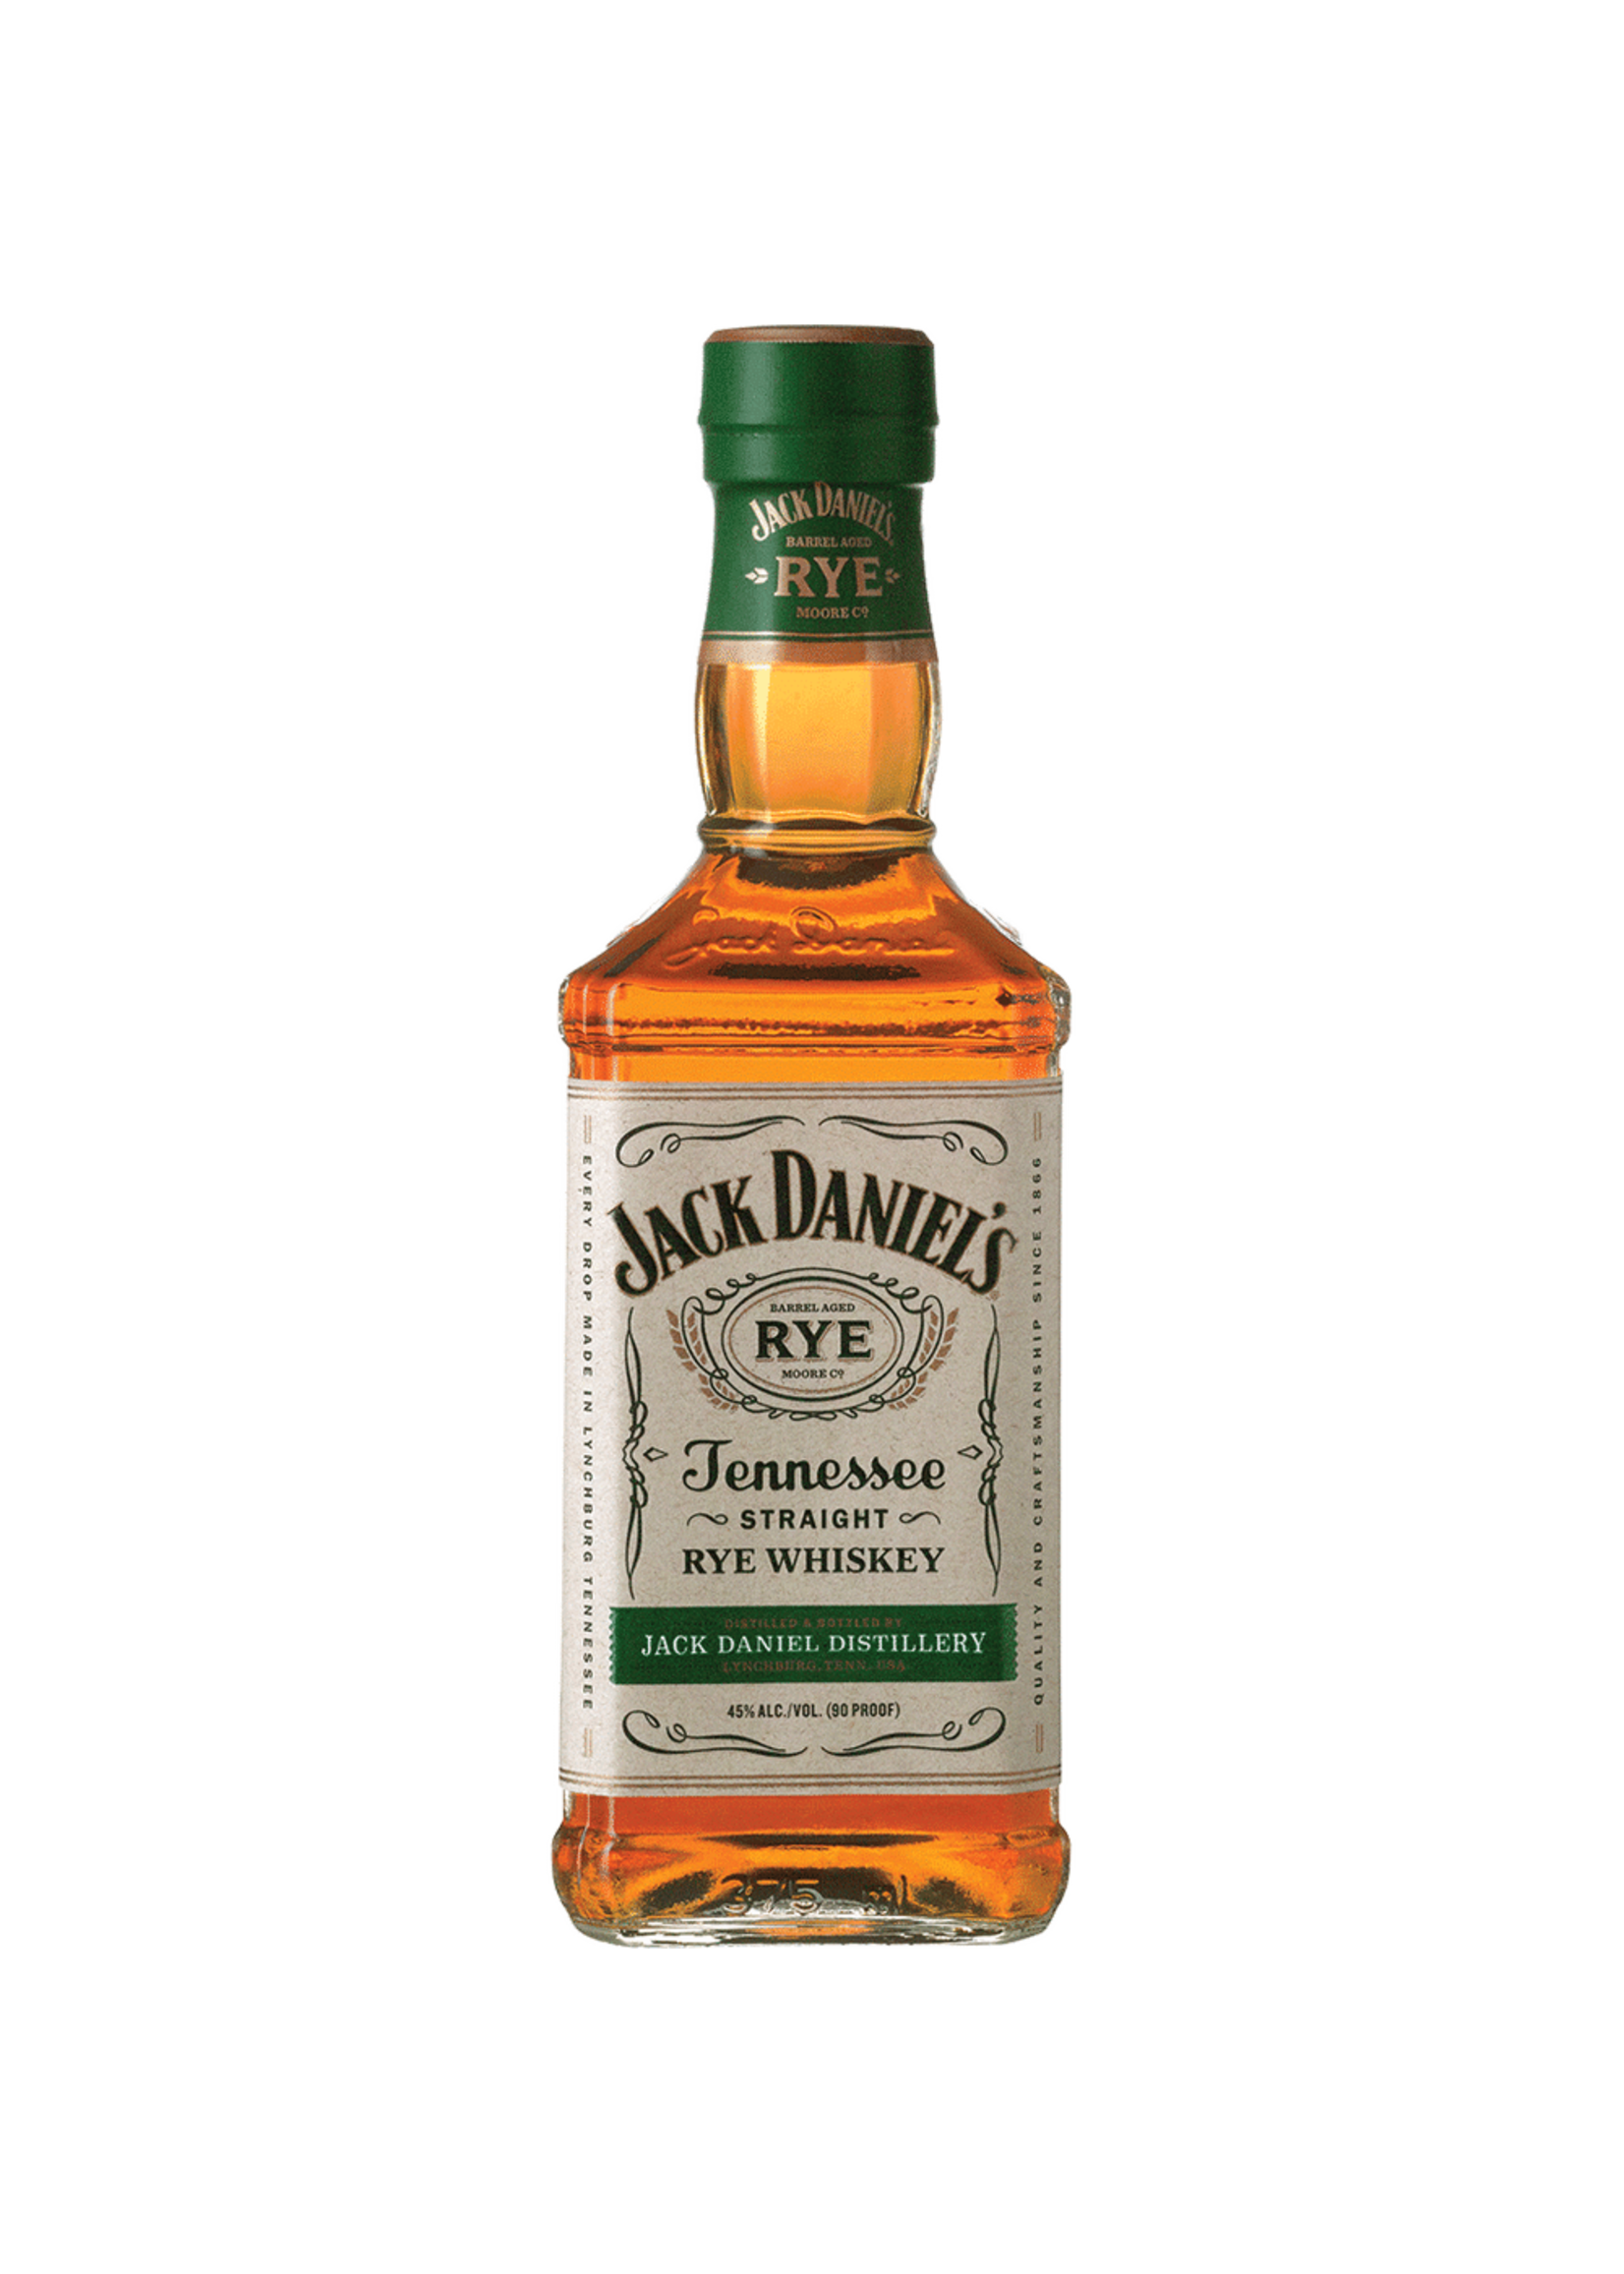 Jack Daniels Jack Daniel's Tennessee Straight Rye Whiskey90proof 750ml